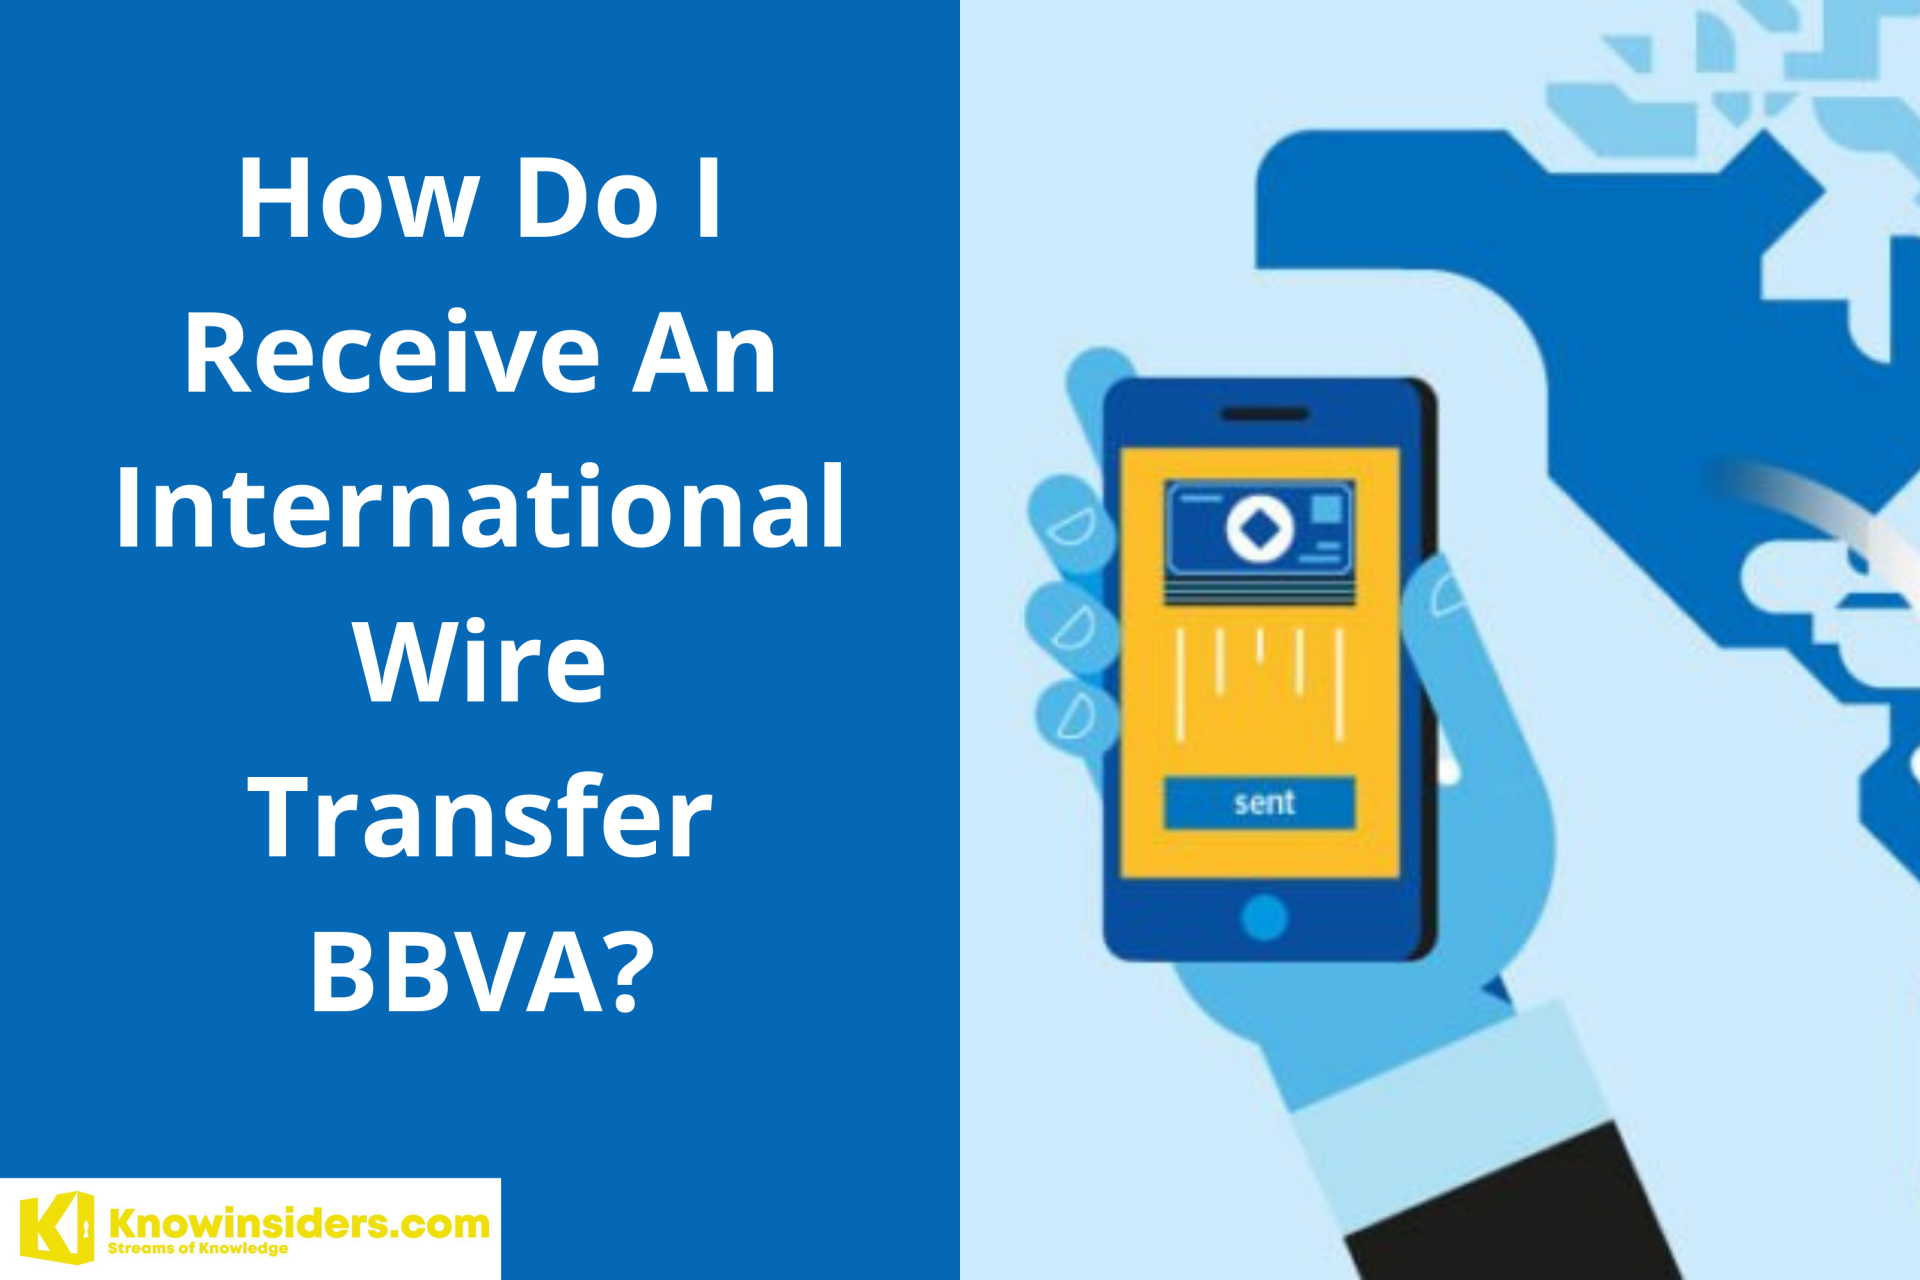 How Do I Receive An International Wire Transfer BBVA?